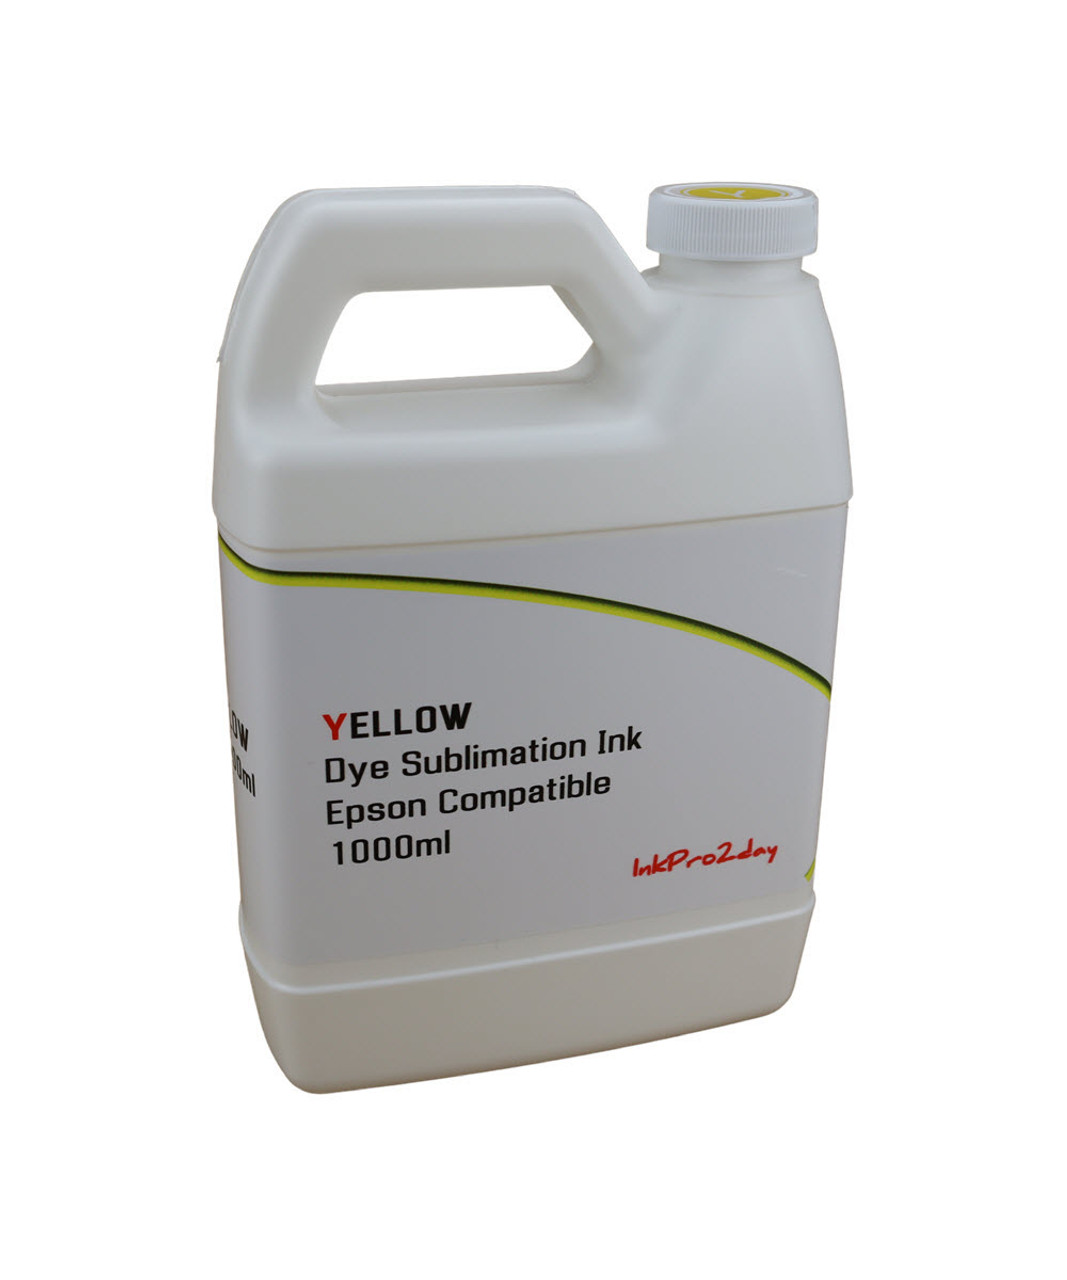 Yellow Dye Sublimation Ink 1000ml Bottle for Epson Stylus Pro 4880 printer